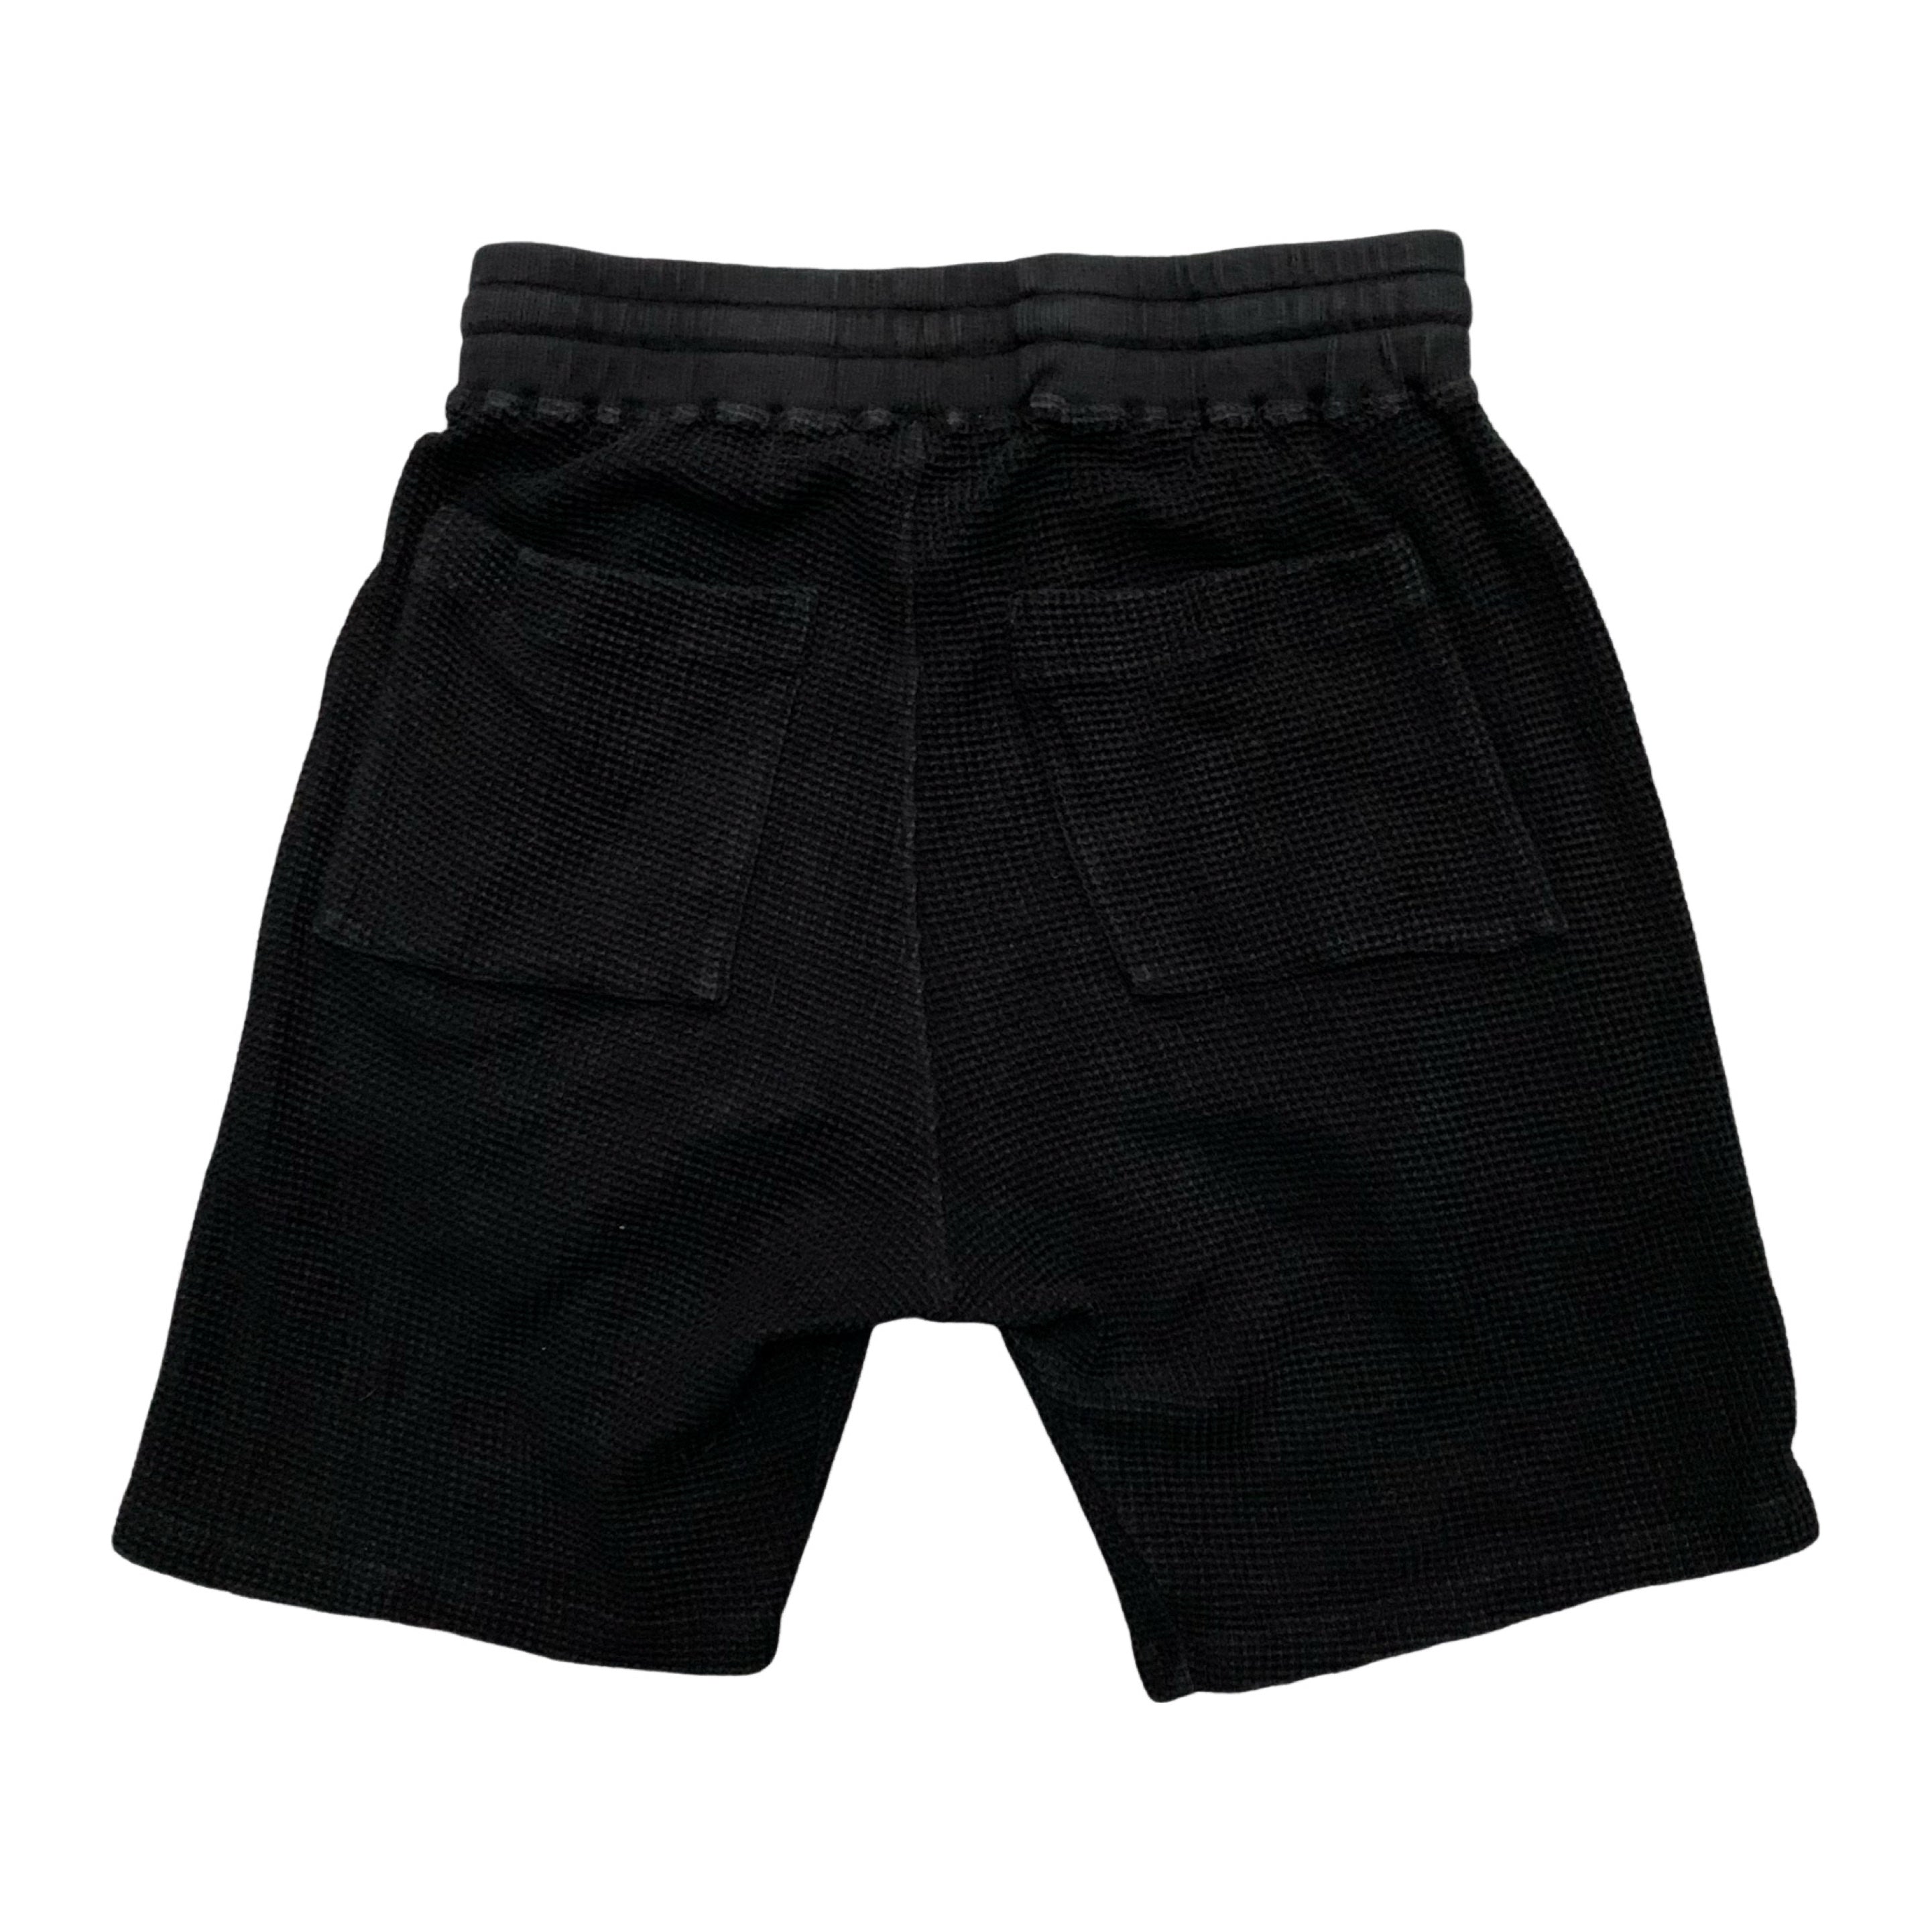 Represent Large Shorts Waffle Black Shorts Bottoms